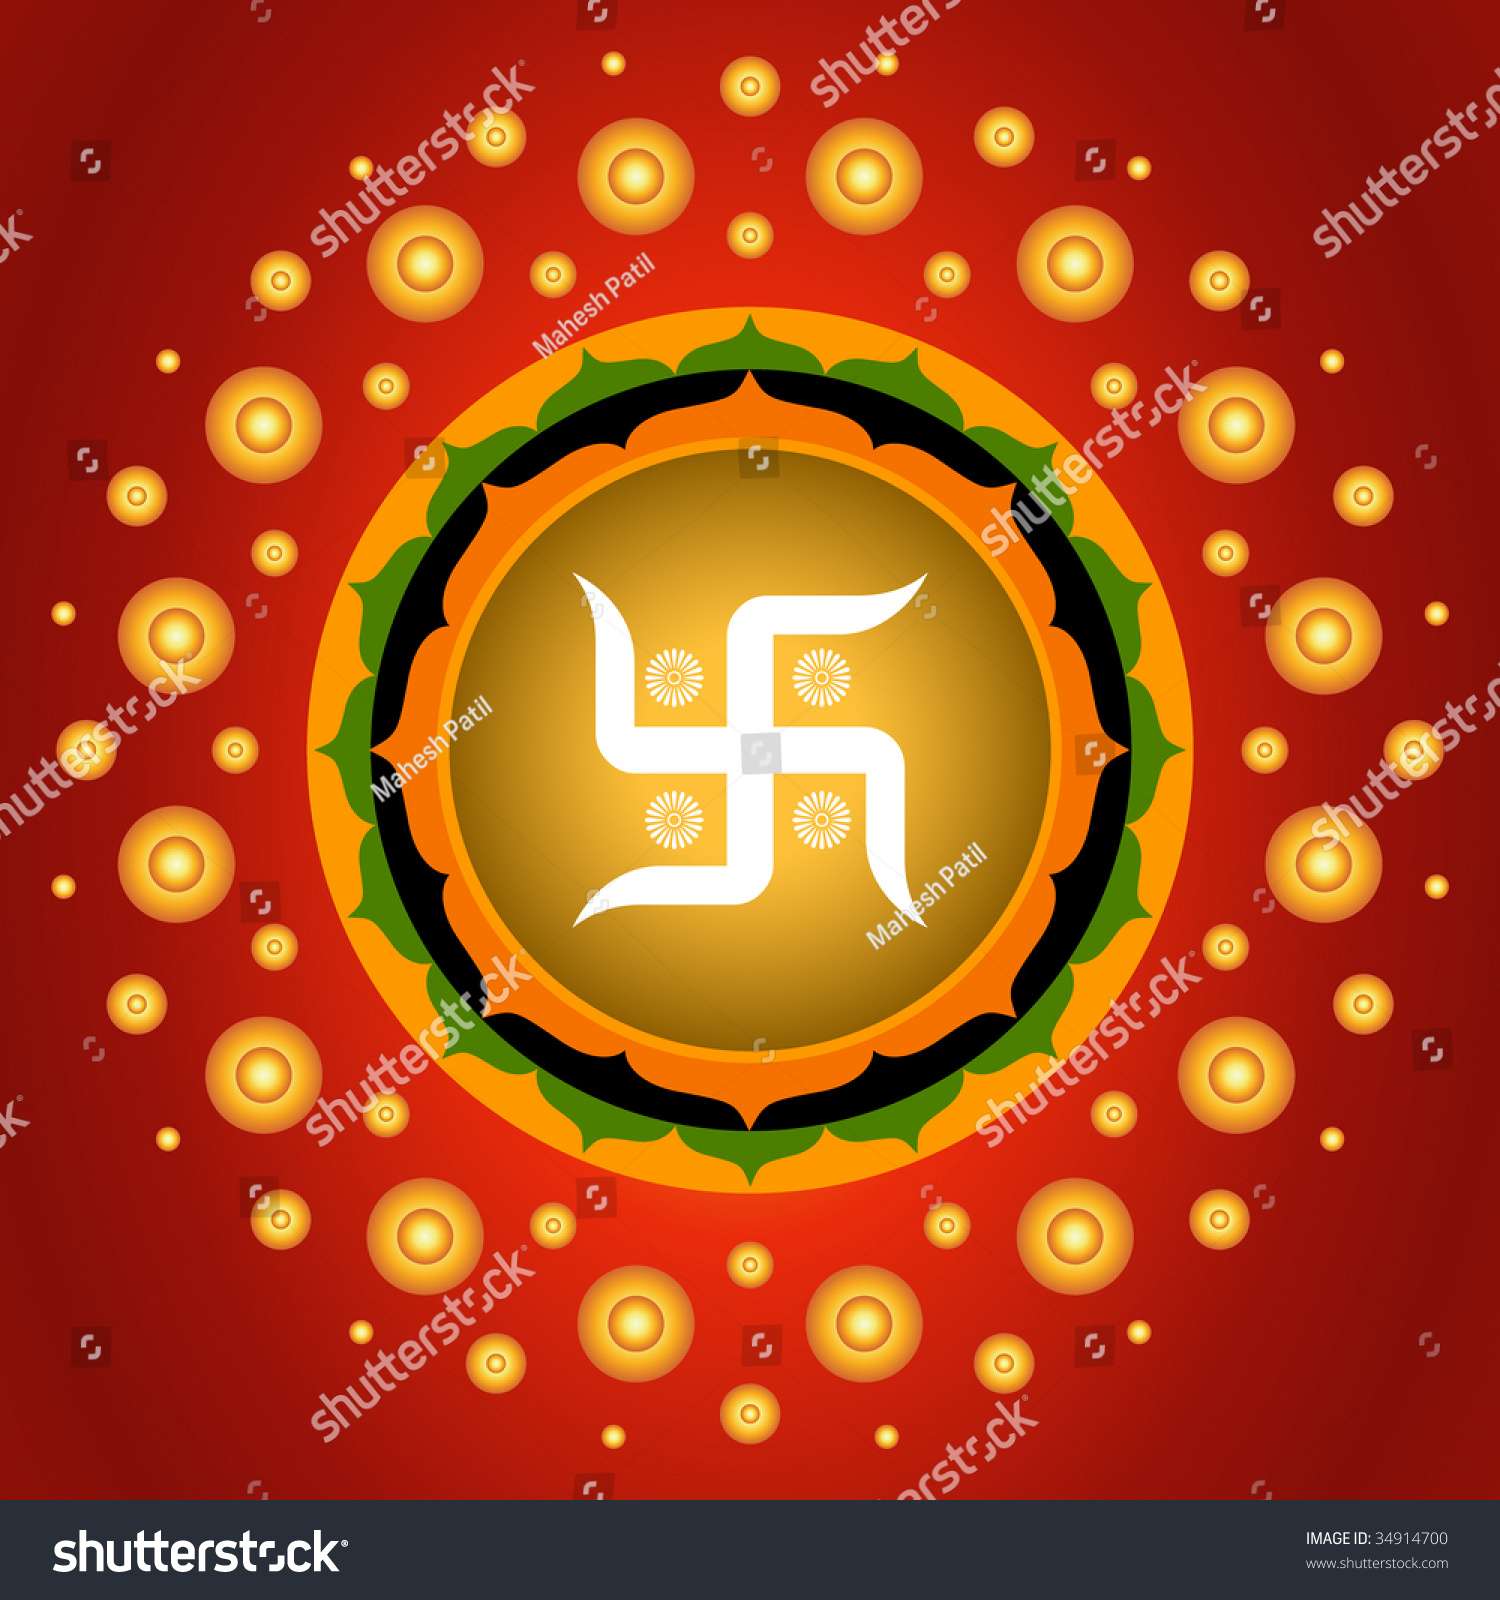 Spiritual Swastika Background Stock Vector Illustration 34914700 ...